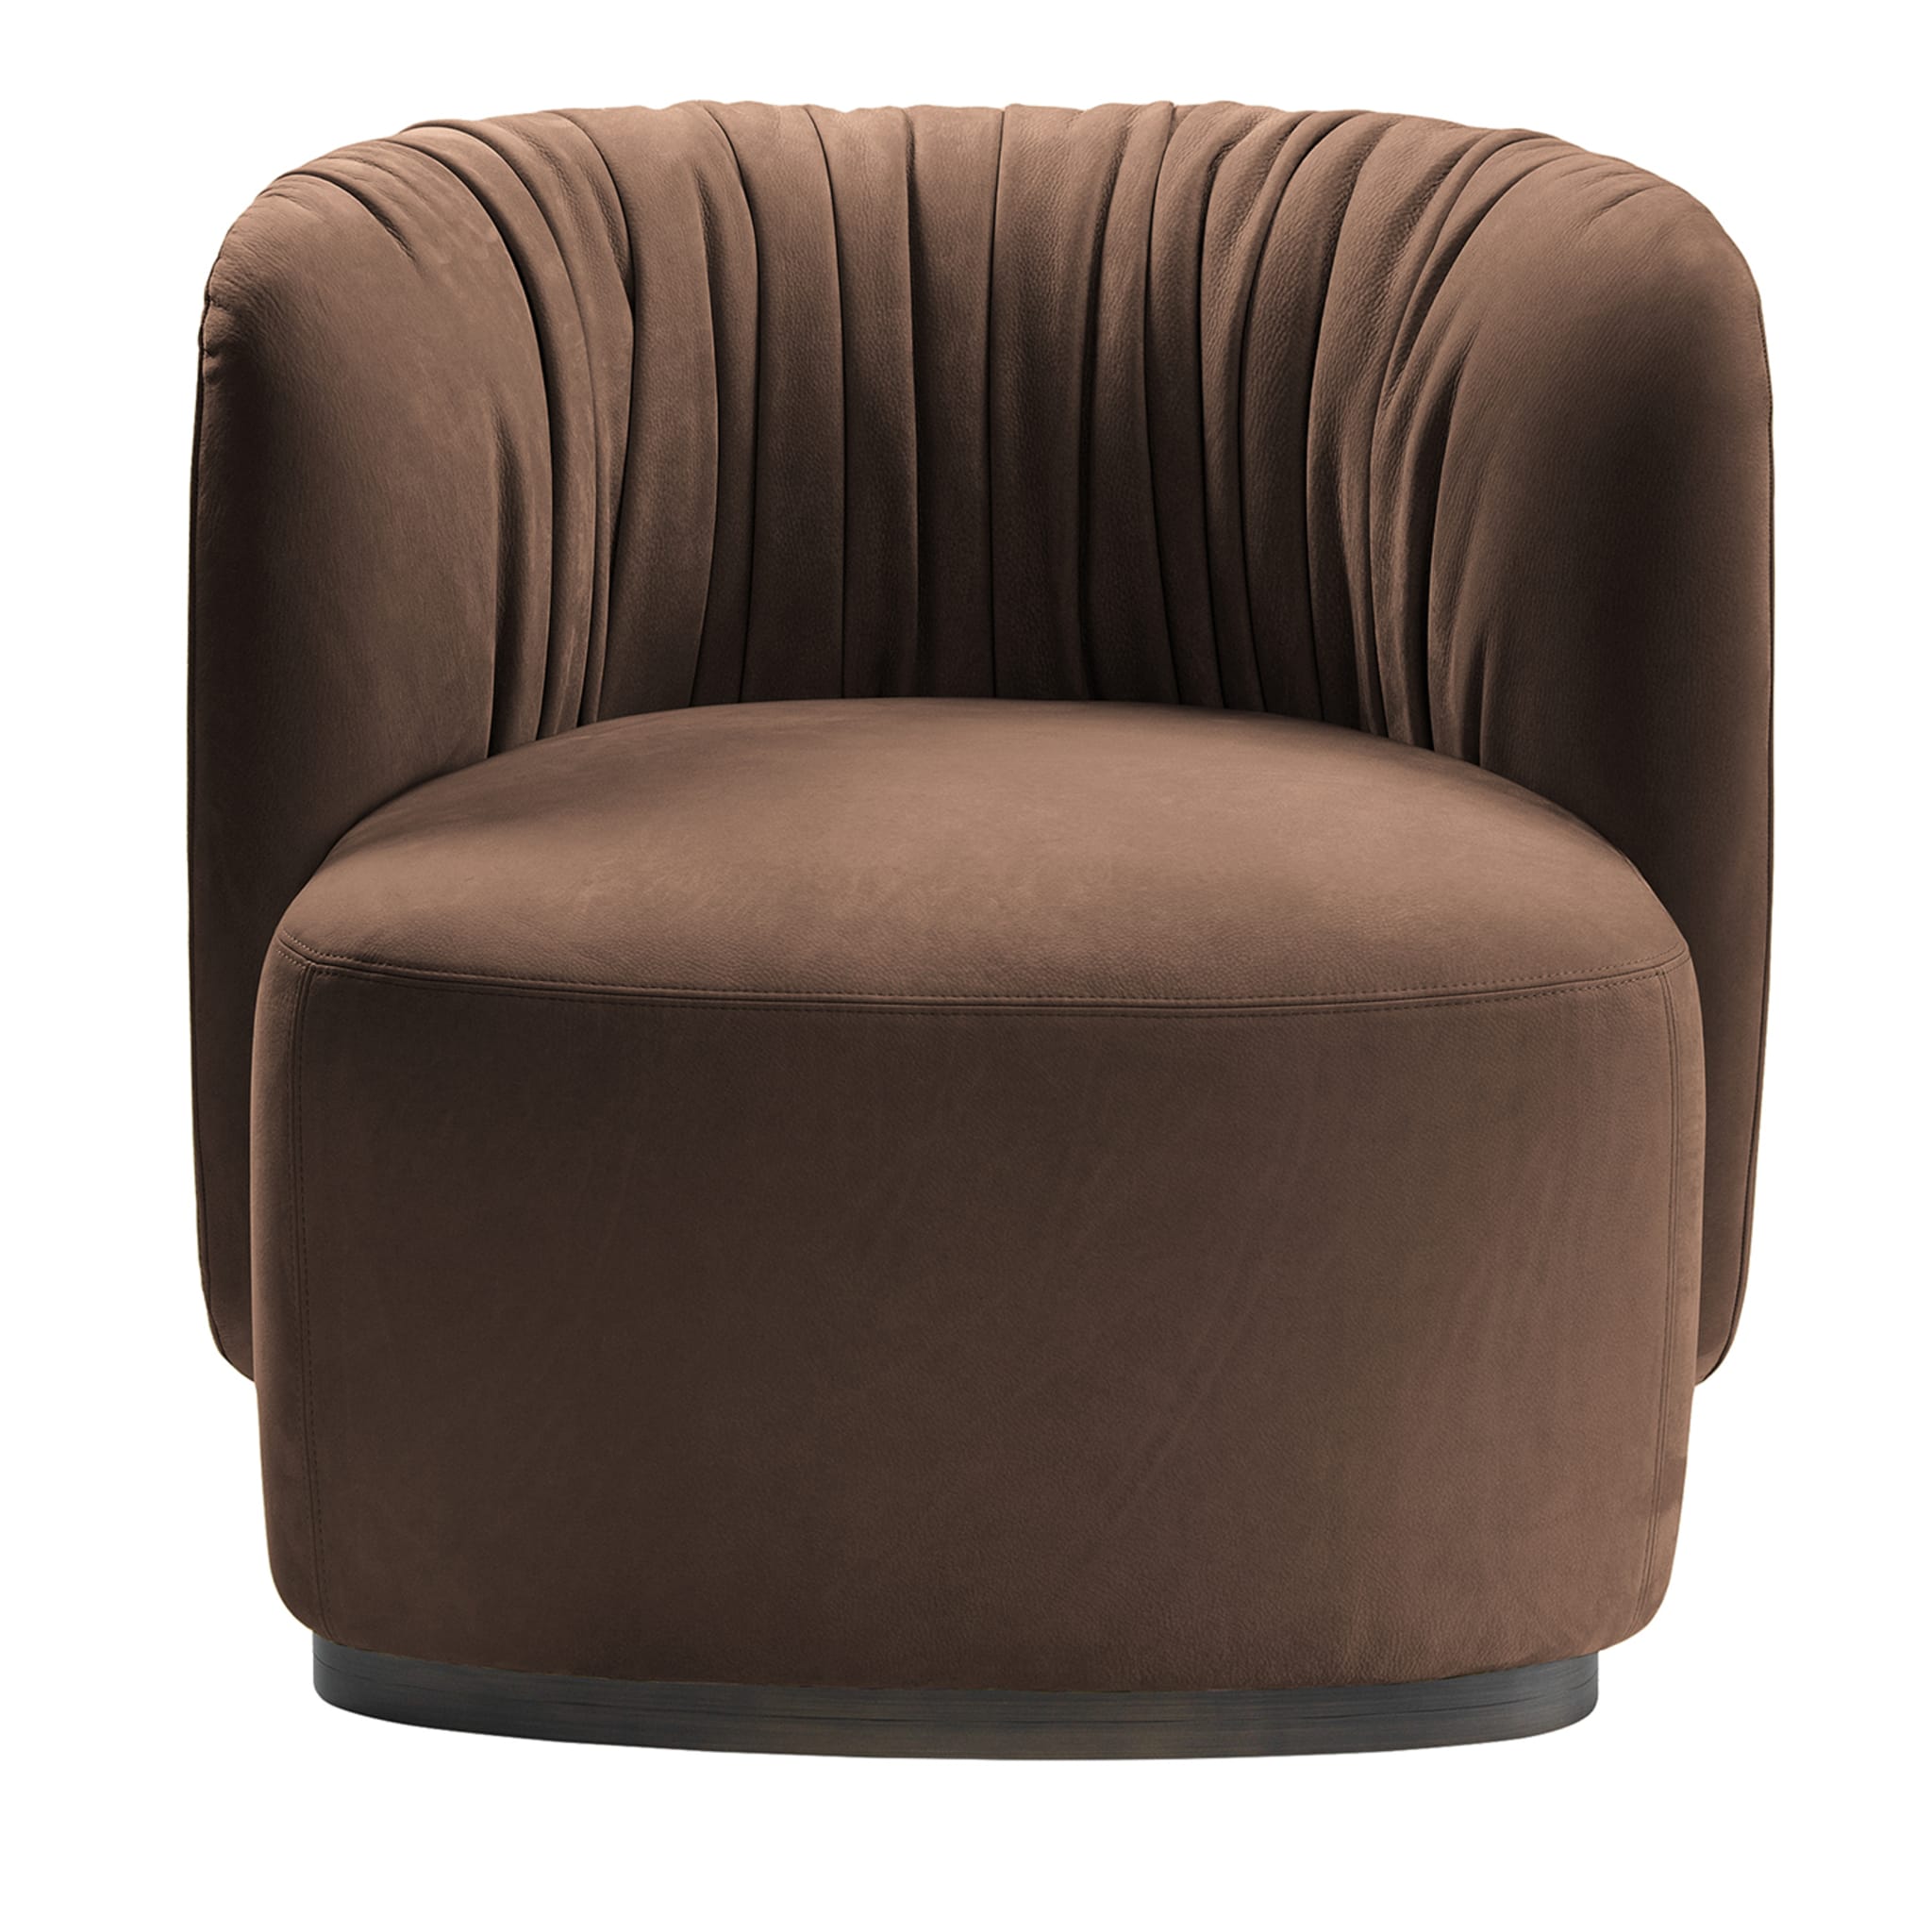 Sipario Brown Armchair by Lorenza Bozzoli - Main view